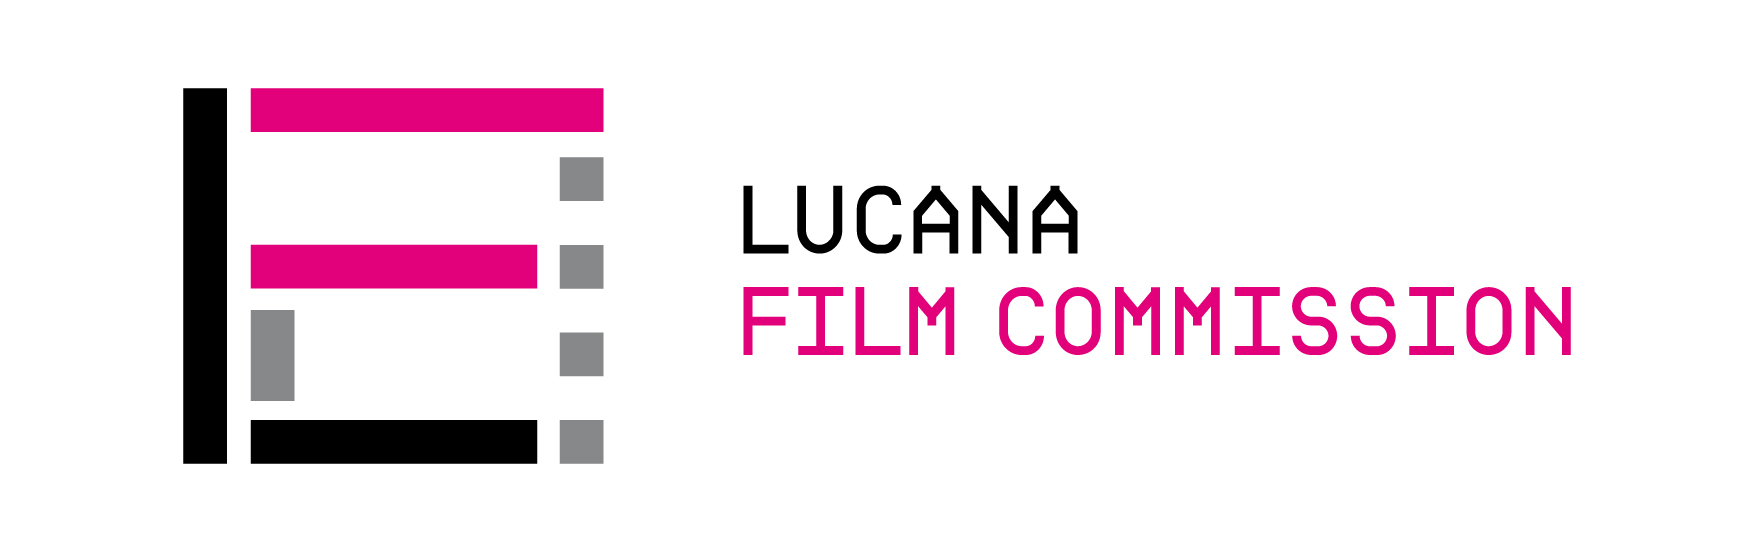 lucania film commission 2014